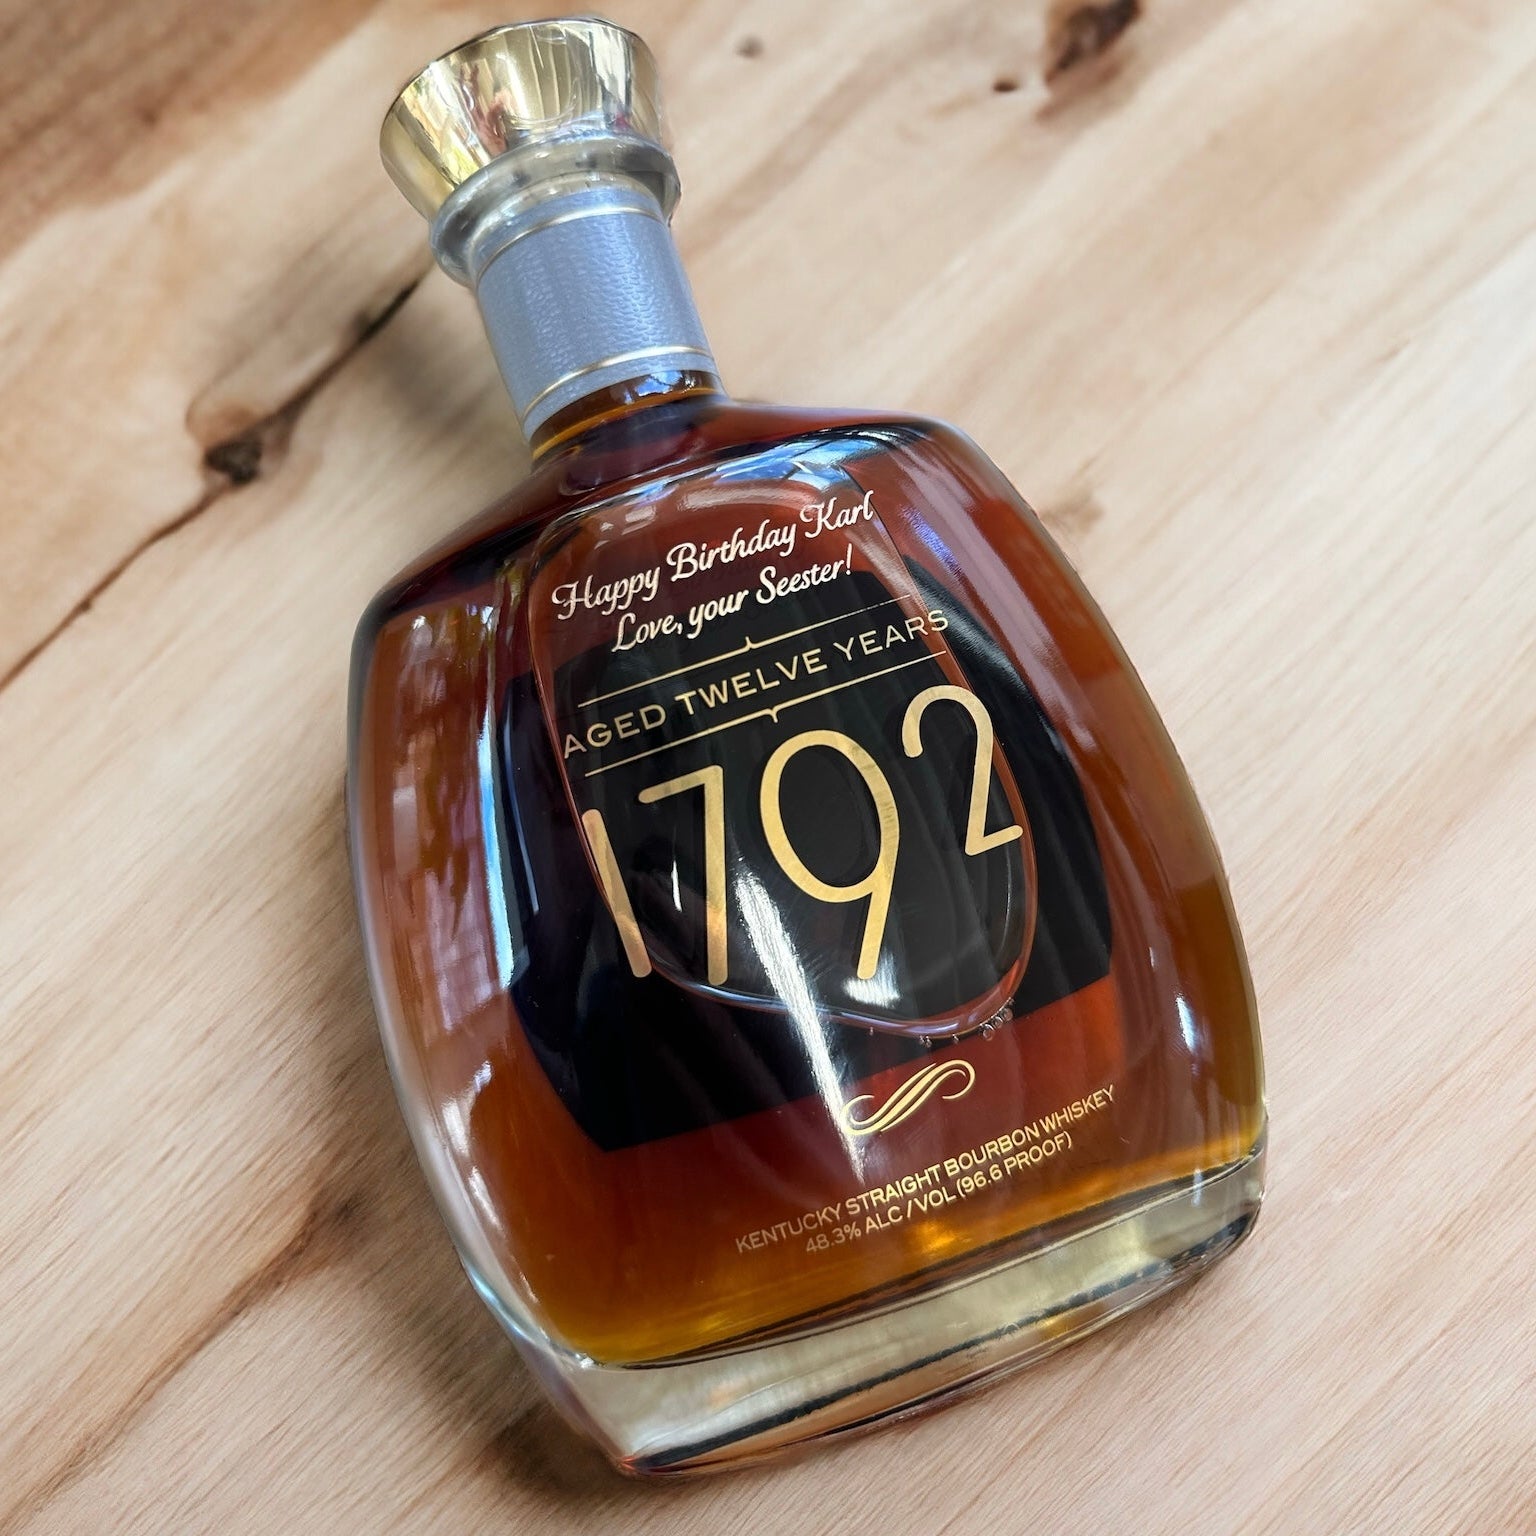 1792 Small Batch Kentucky Straight Bourbon Whiskey 3 Bottles Bundle  